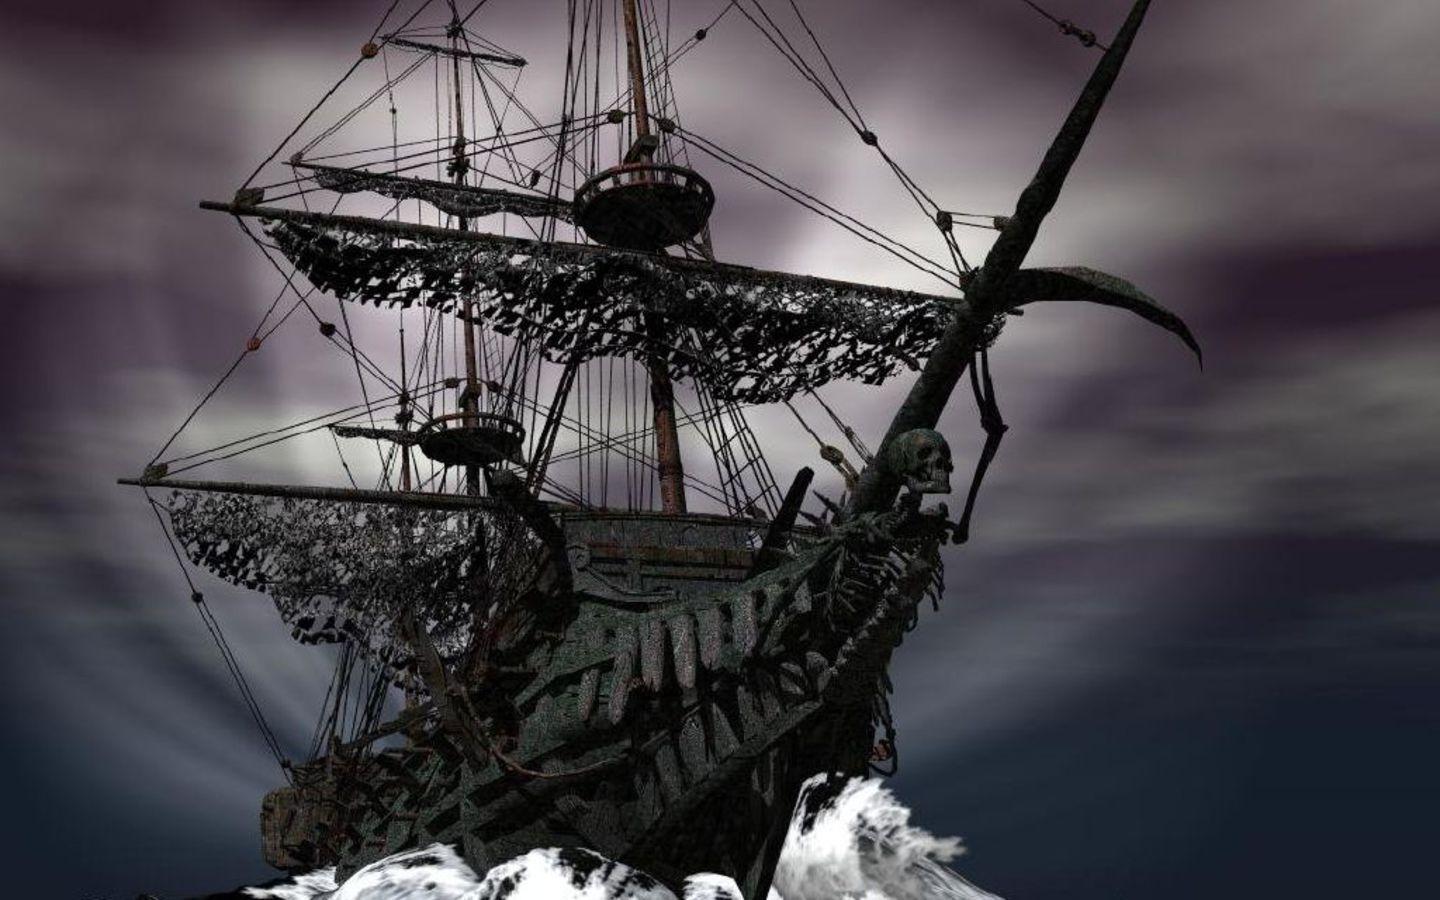 The Flying Dutchman Ship Wallpaper, iPhone Wallpaper, Facebook